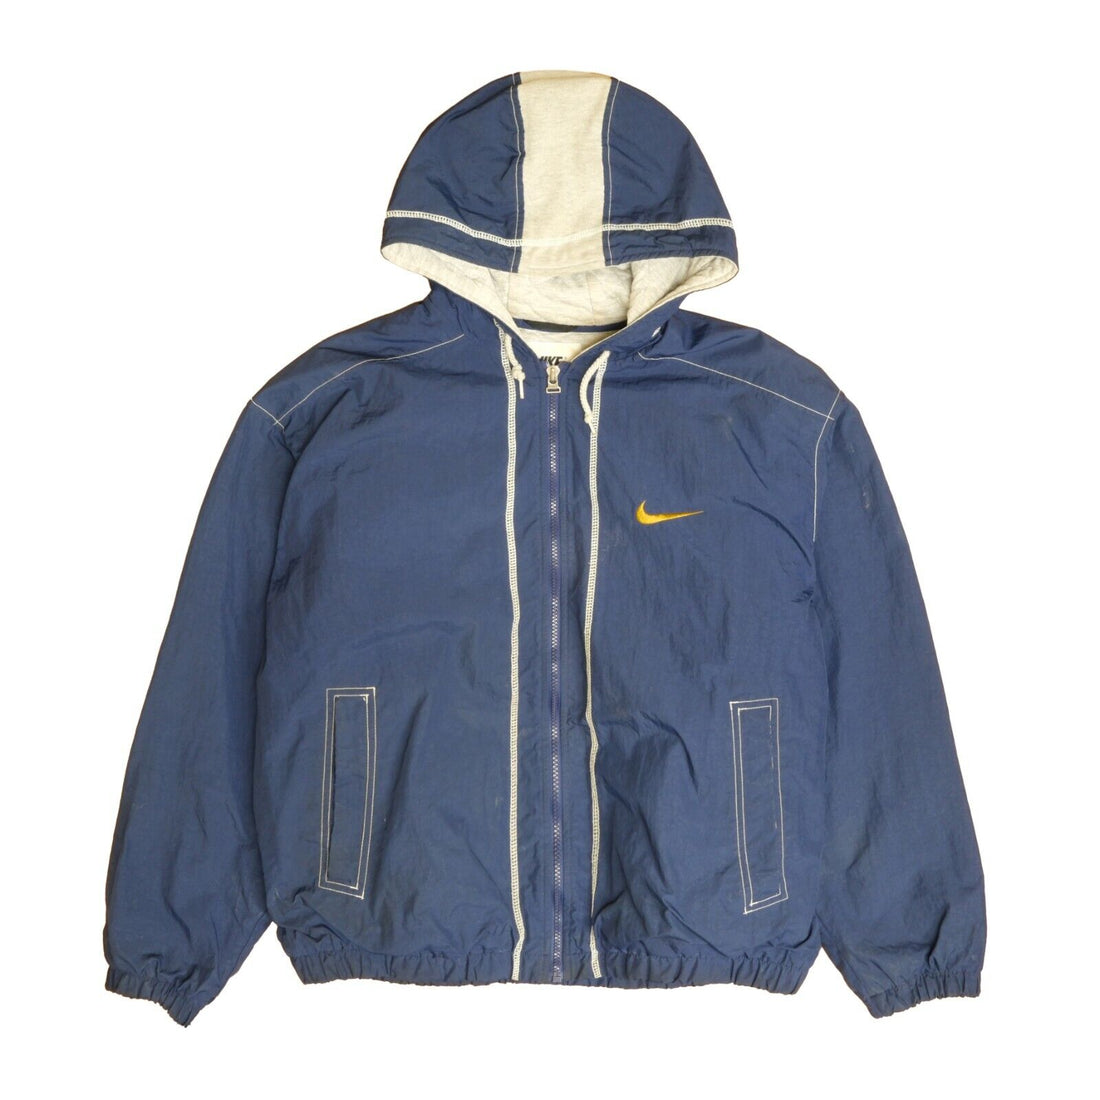 Vintage Nike Bomber Jacket Size Medium Blue Contrast Stitch